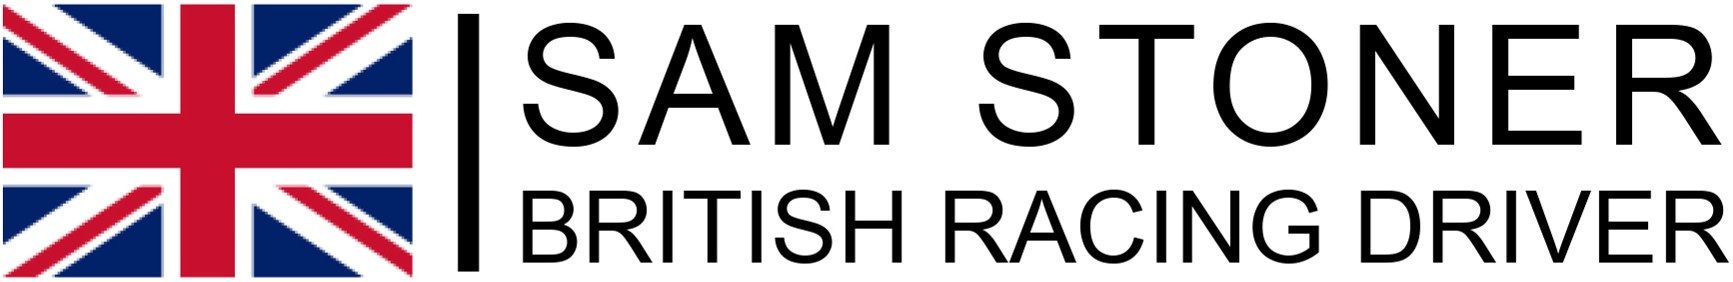 Sam Stoner Racing | Sam Stoner | British Racing Driver